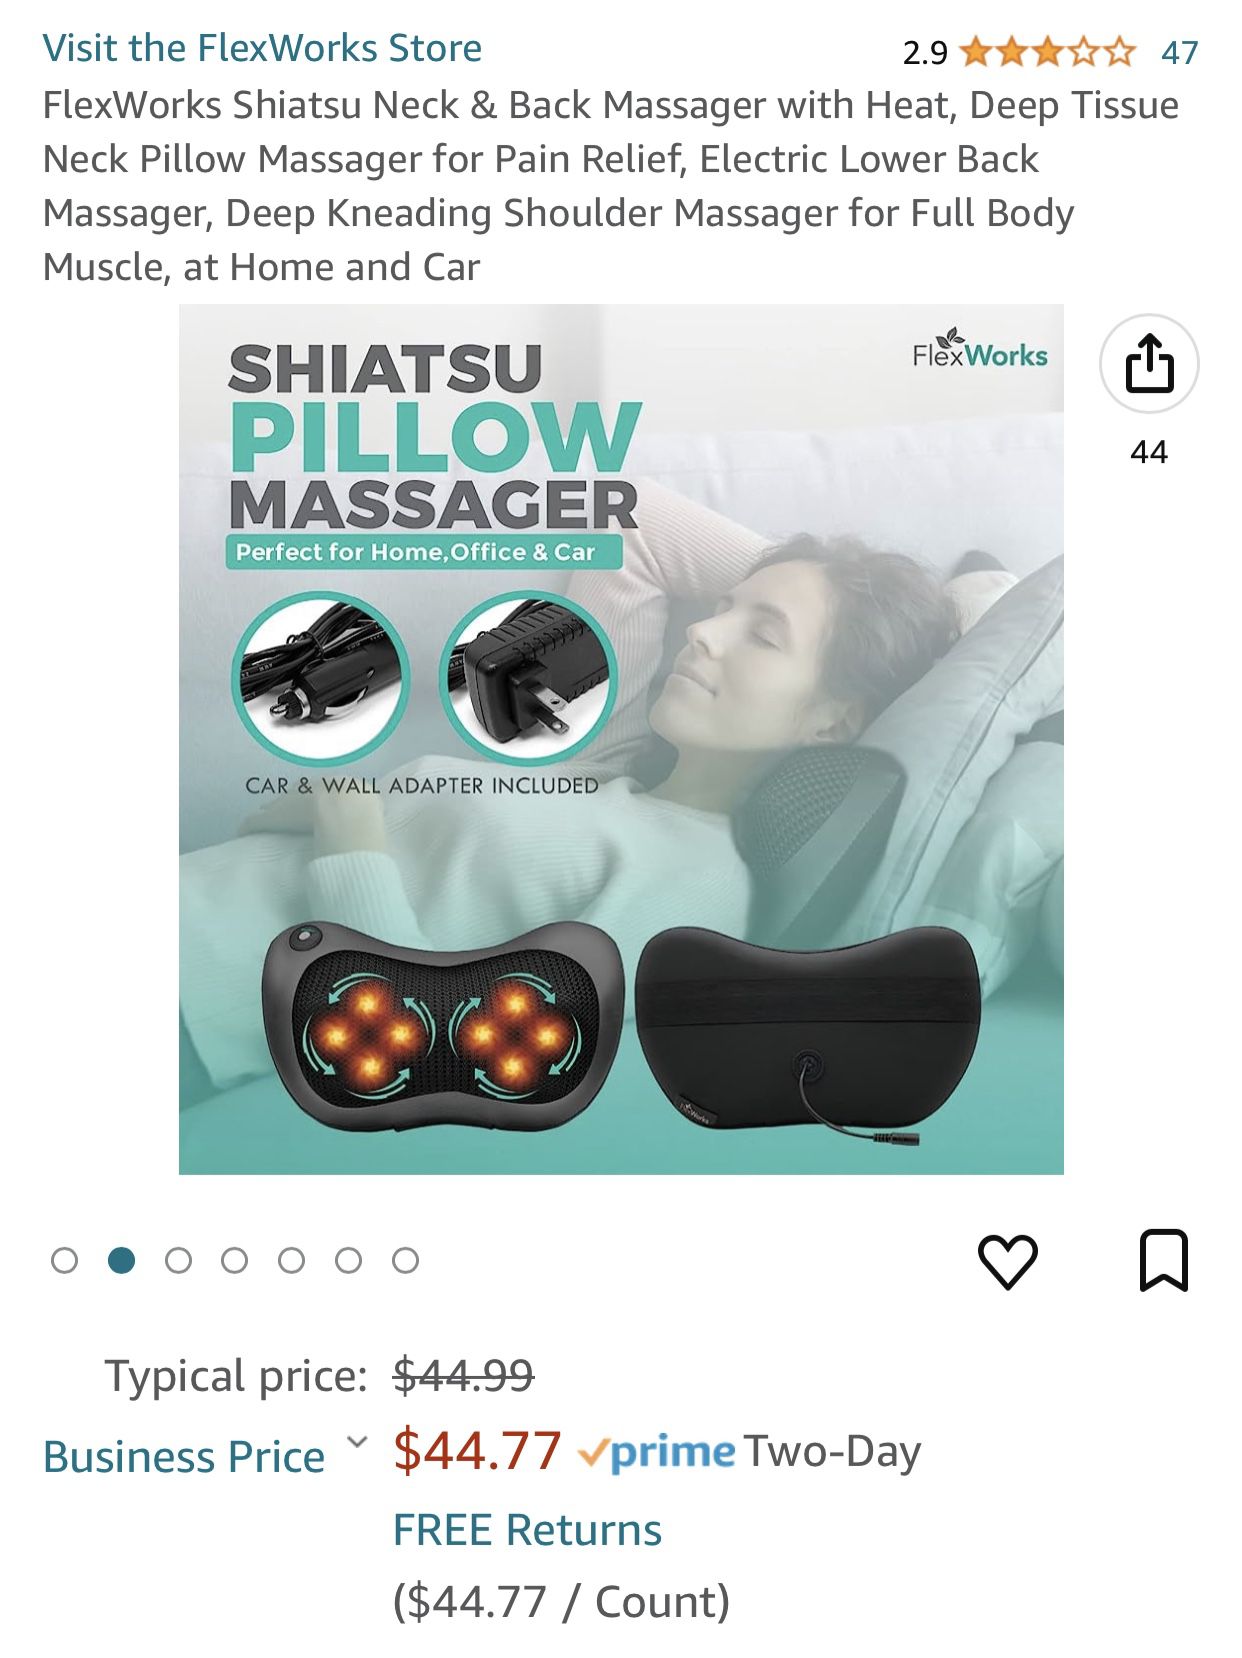 FlexWorks Shiatsu Neck Shoulder & Back Massager with Heat